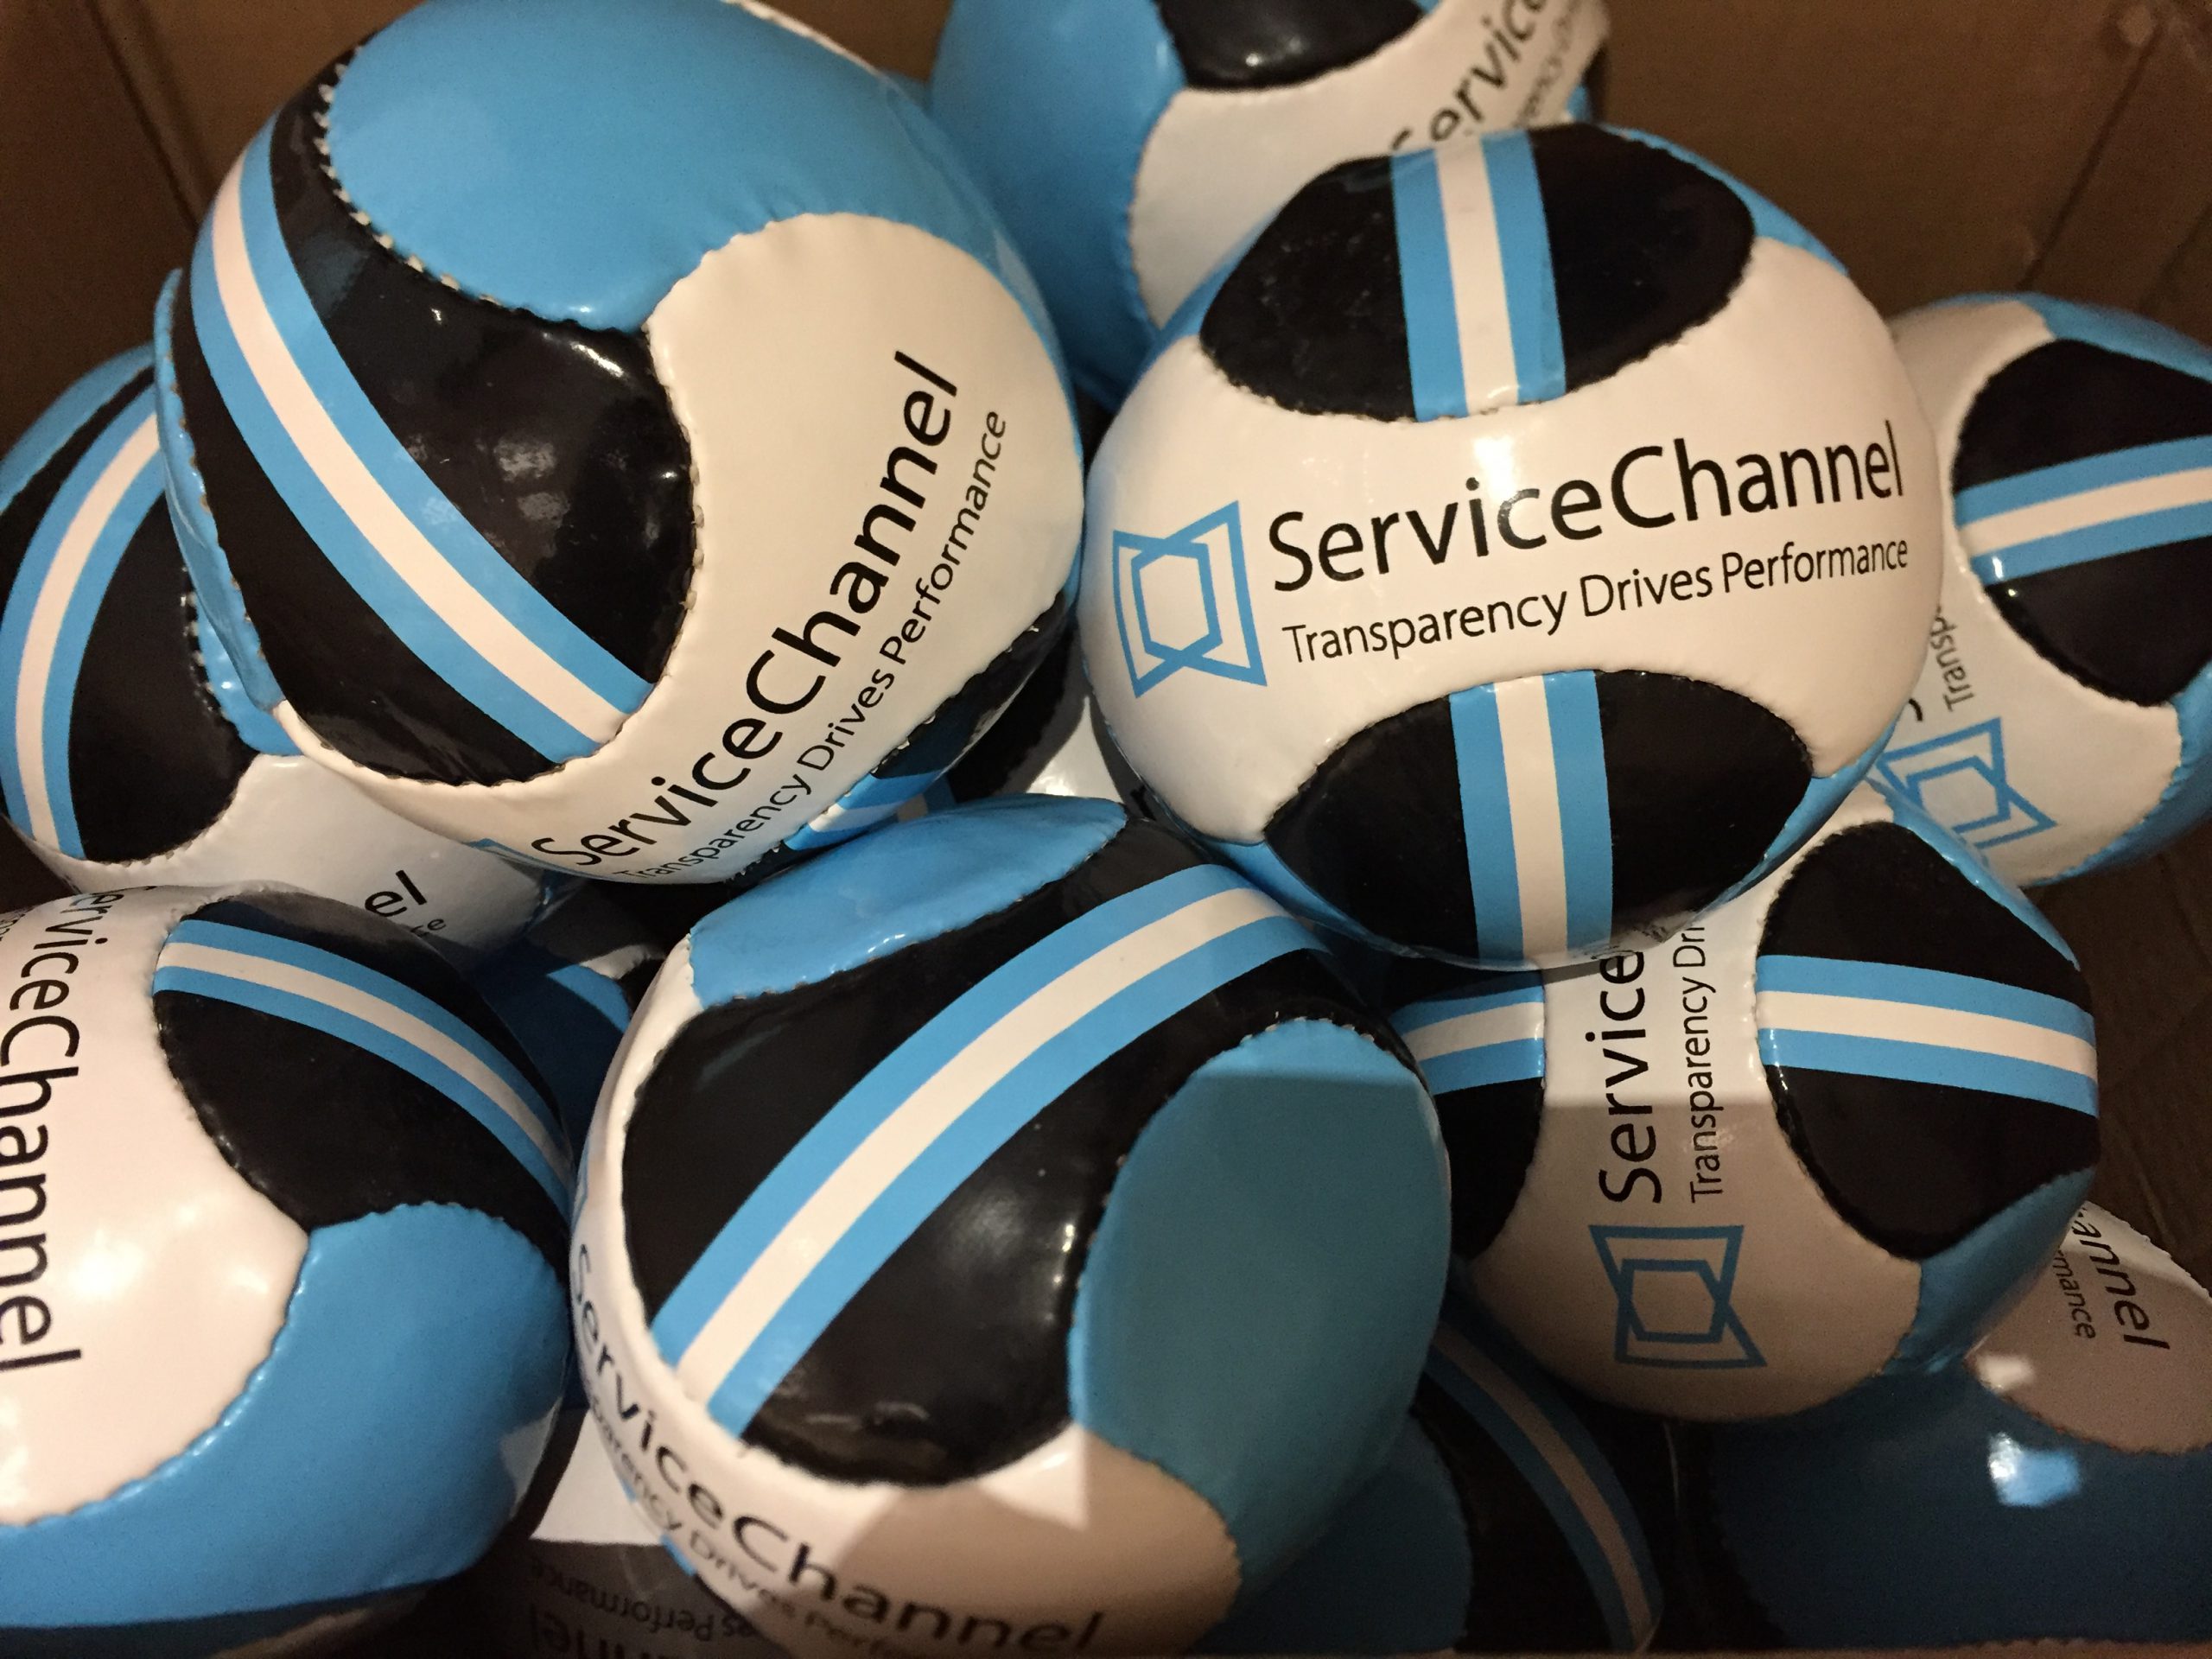 ServiceChannel branded sport balls in a pile